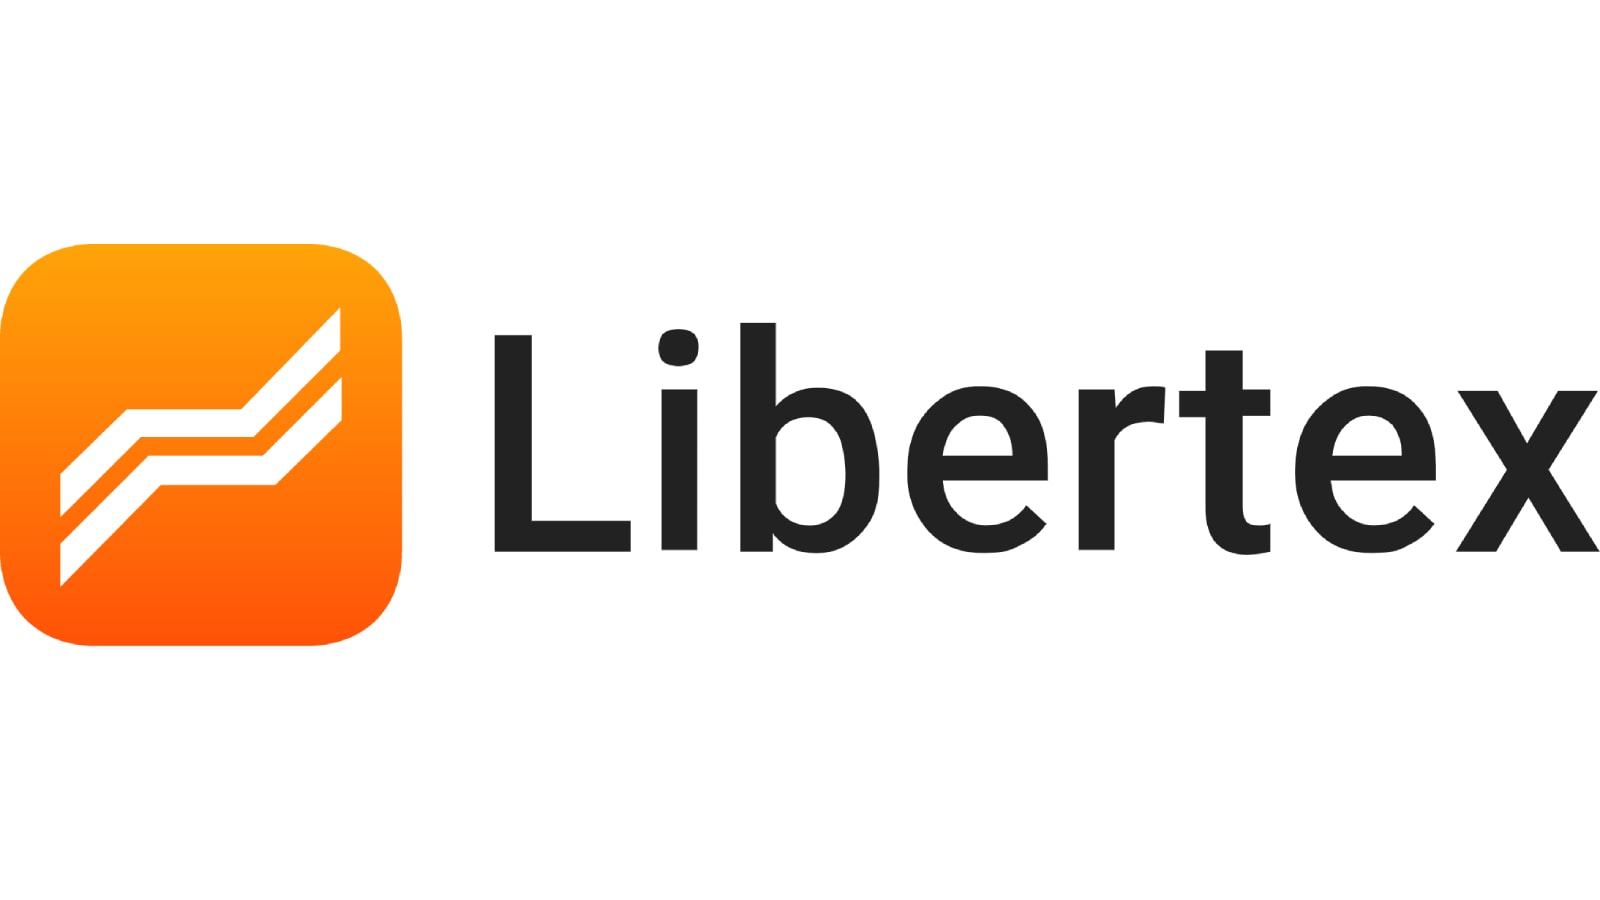 Logo Libertex